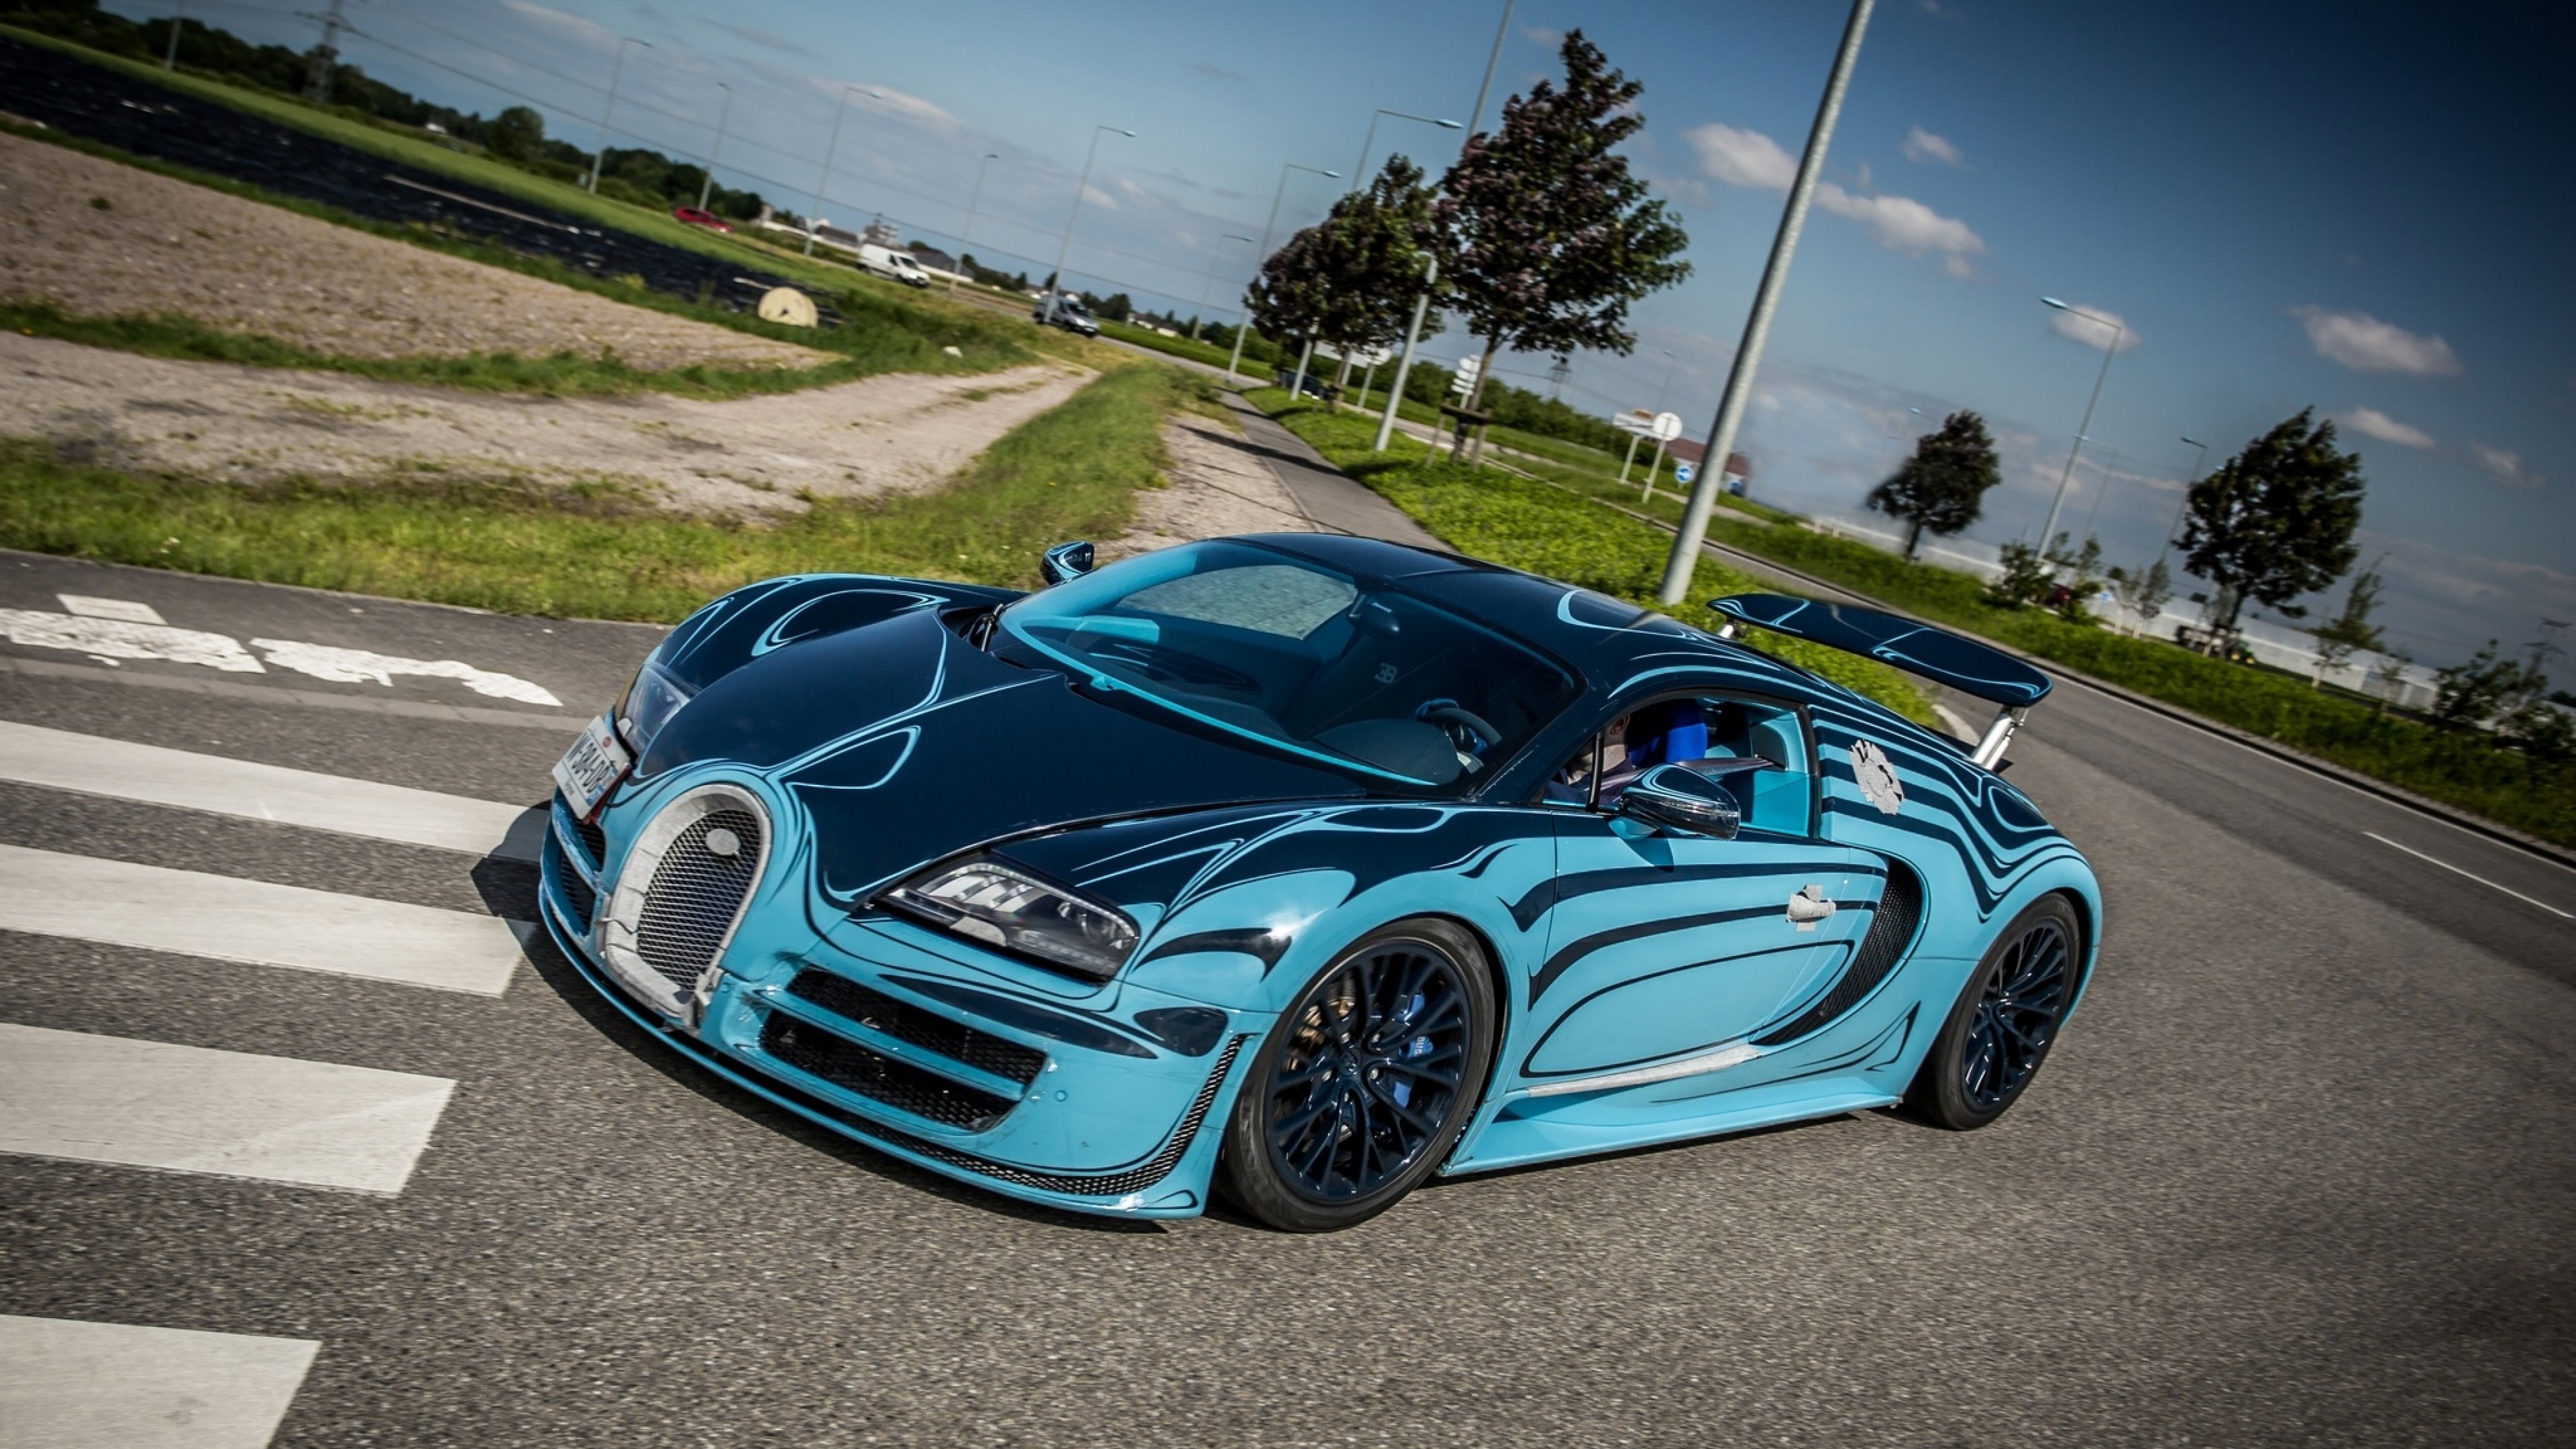 Bugatti Chiron Wallpapers 74+ images